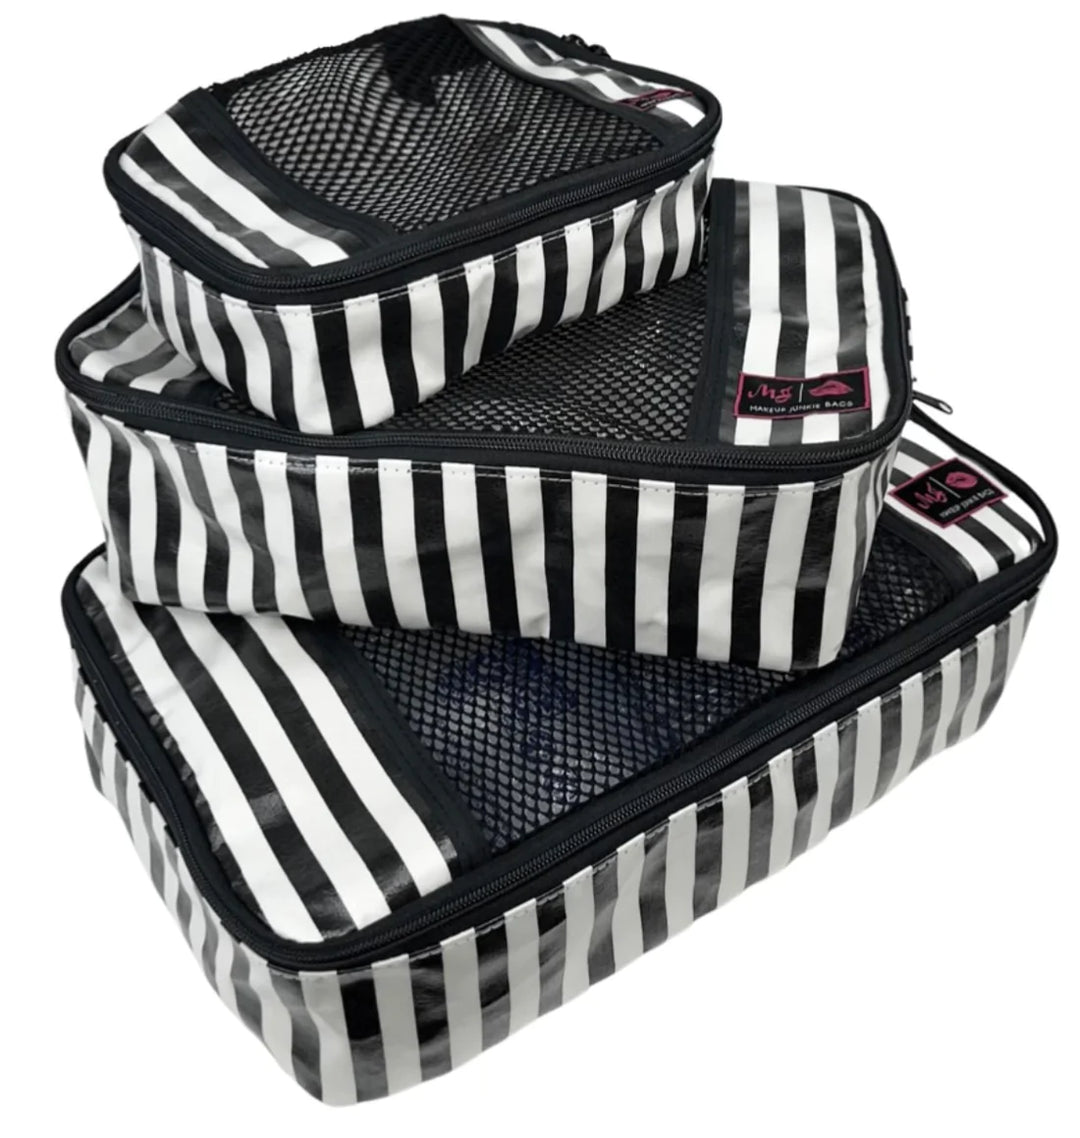 Make up Junkie Bag - Glam Stripe Onyx Packing Cubes *PRE ORDER